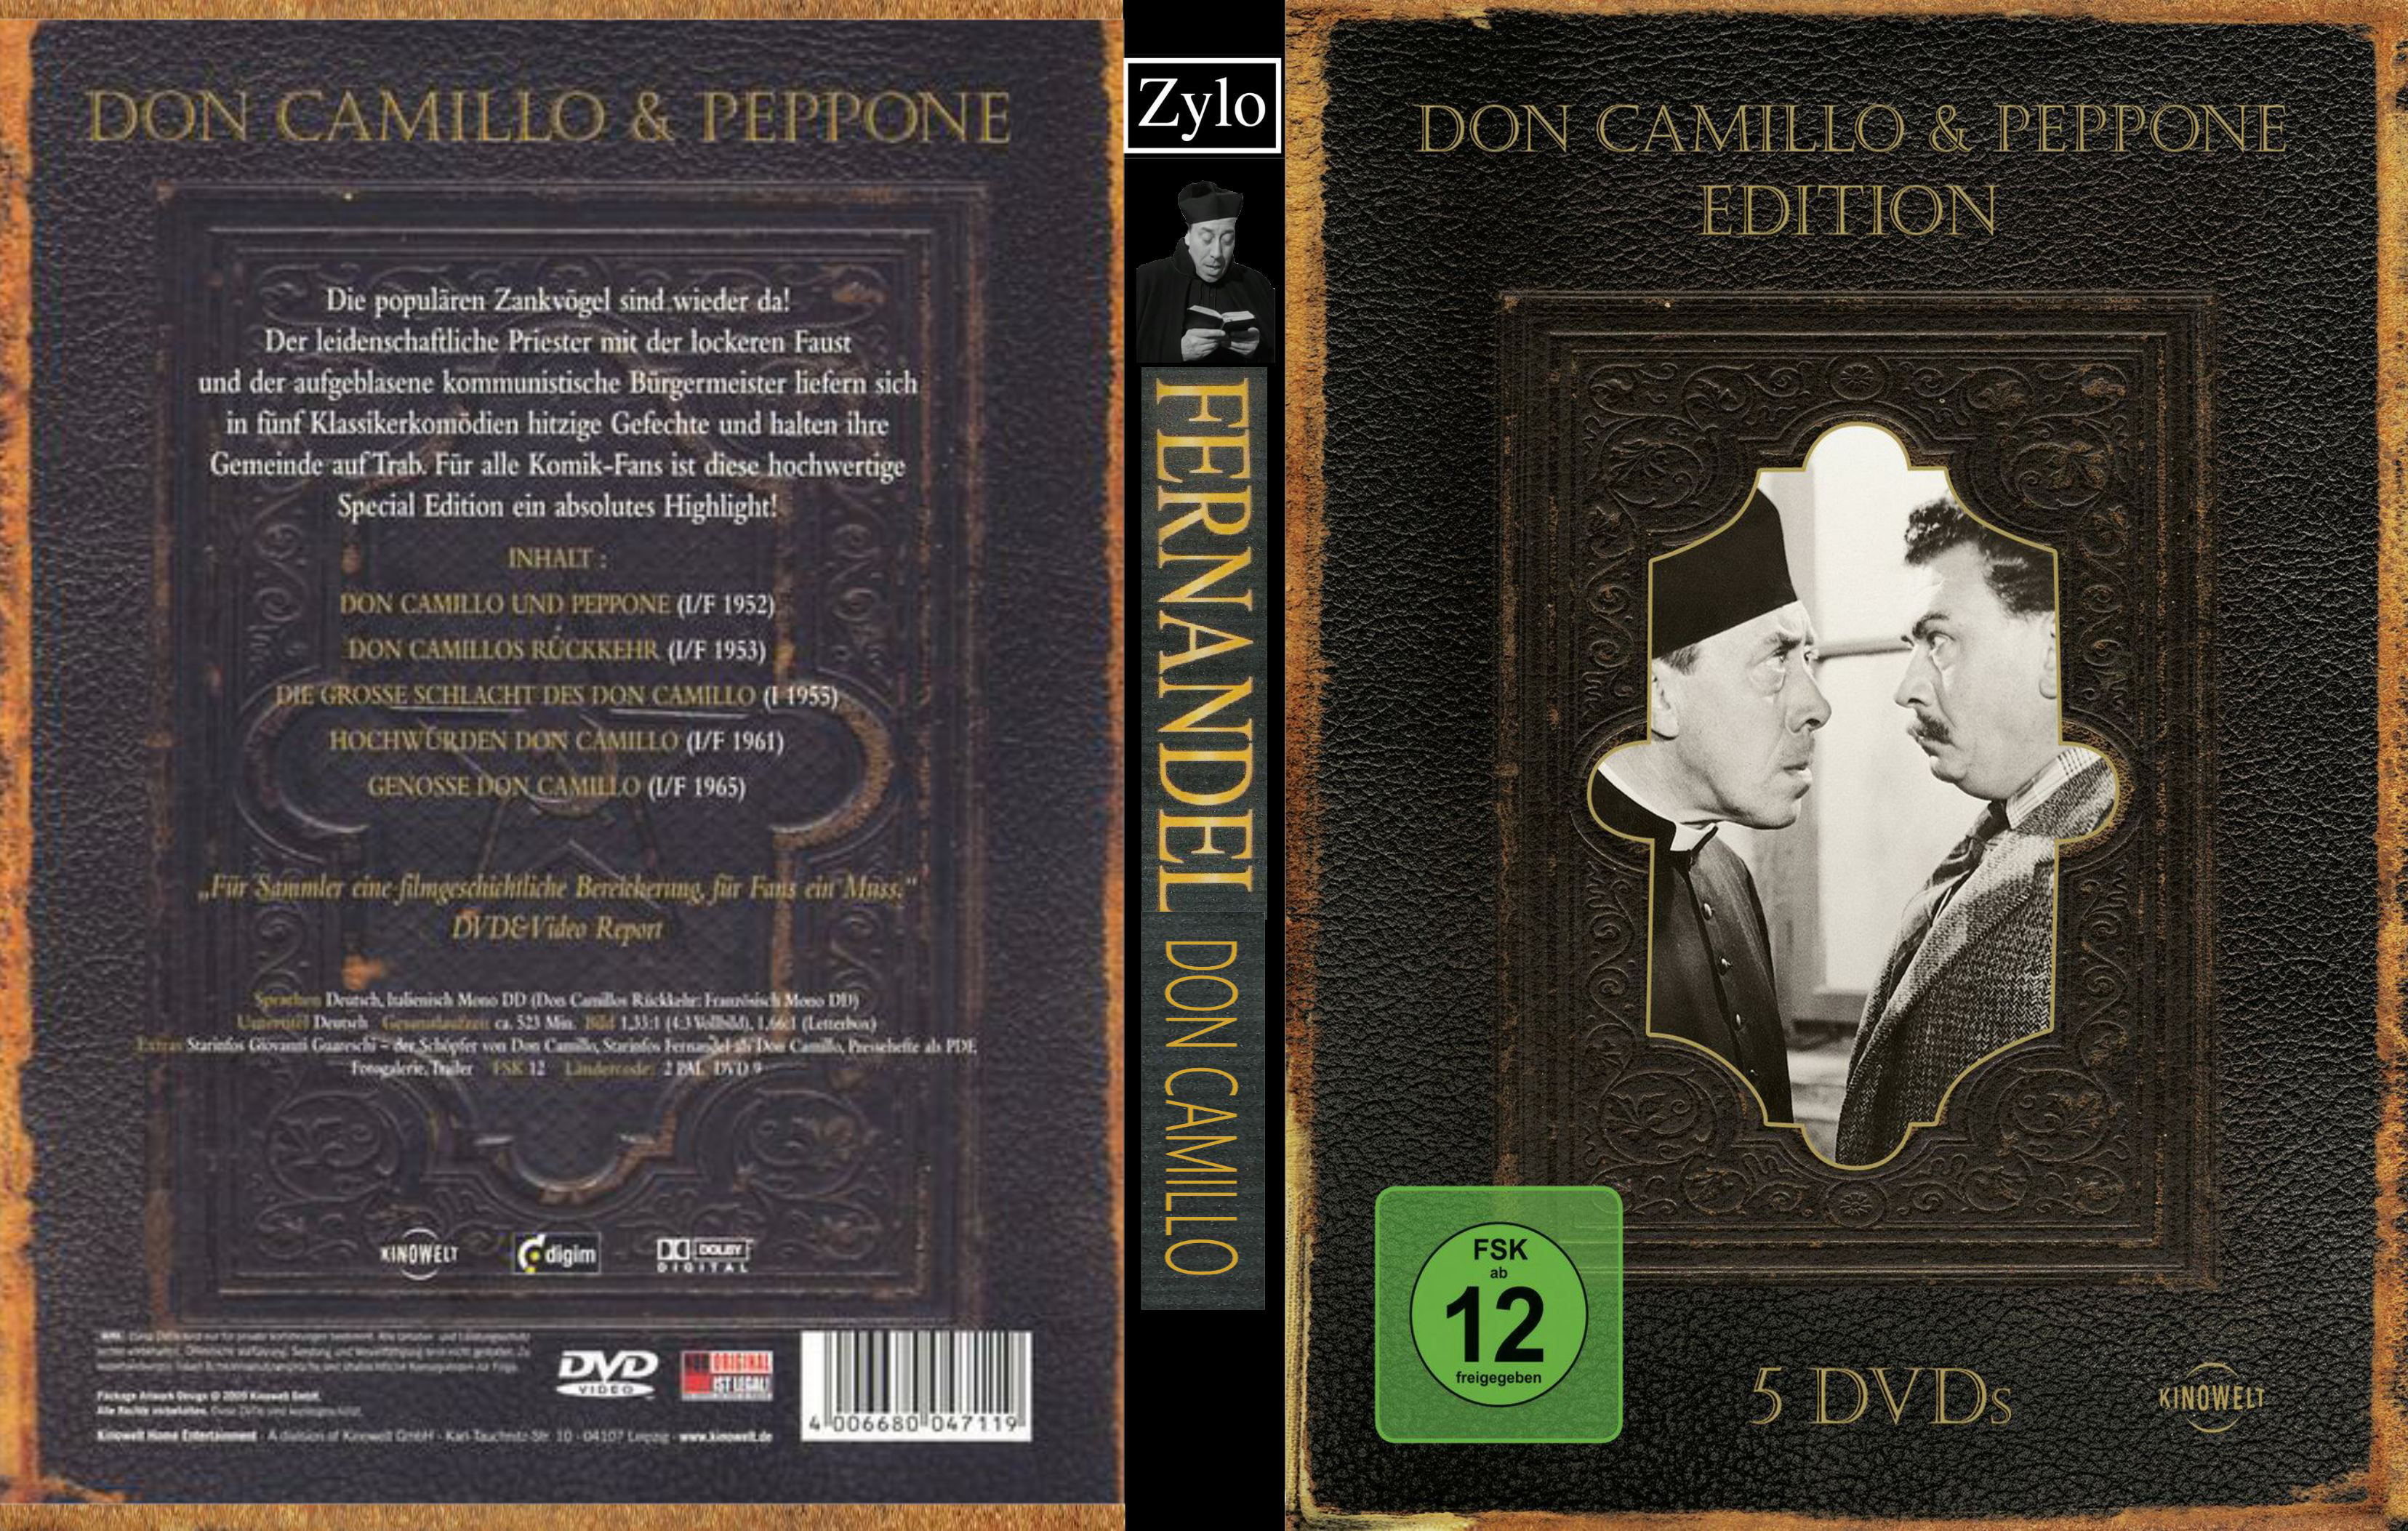 Don Camillo & Peppone (5 DvD's - DvD 1